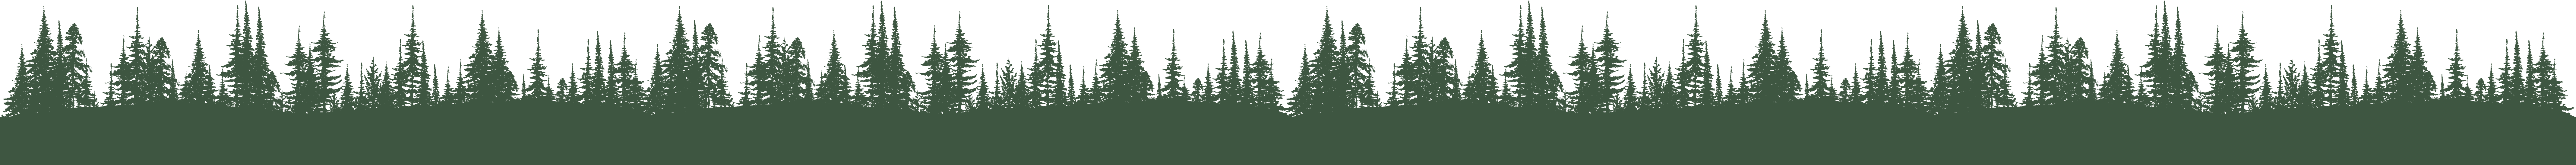 pine tree forest illustration